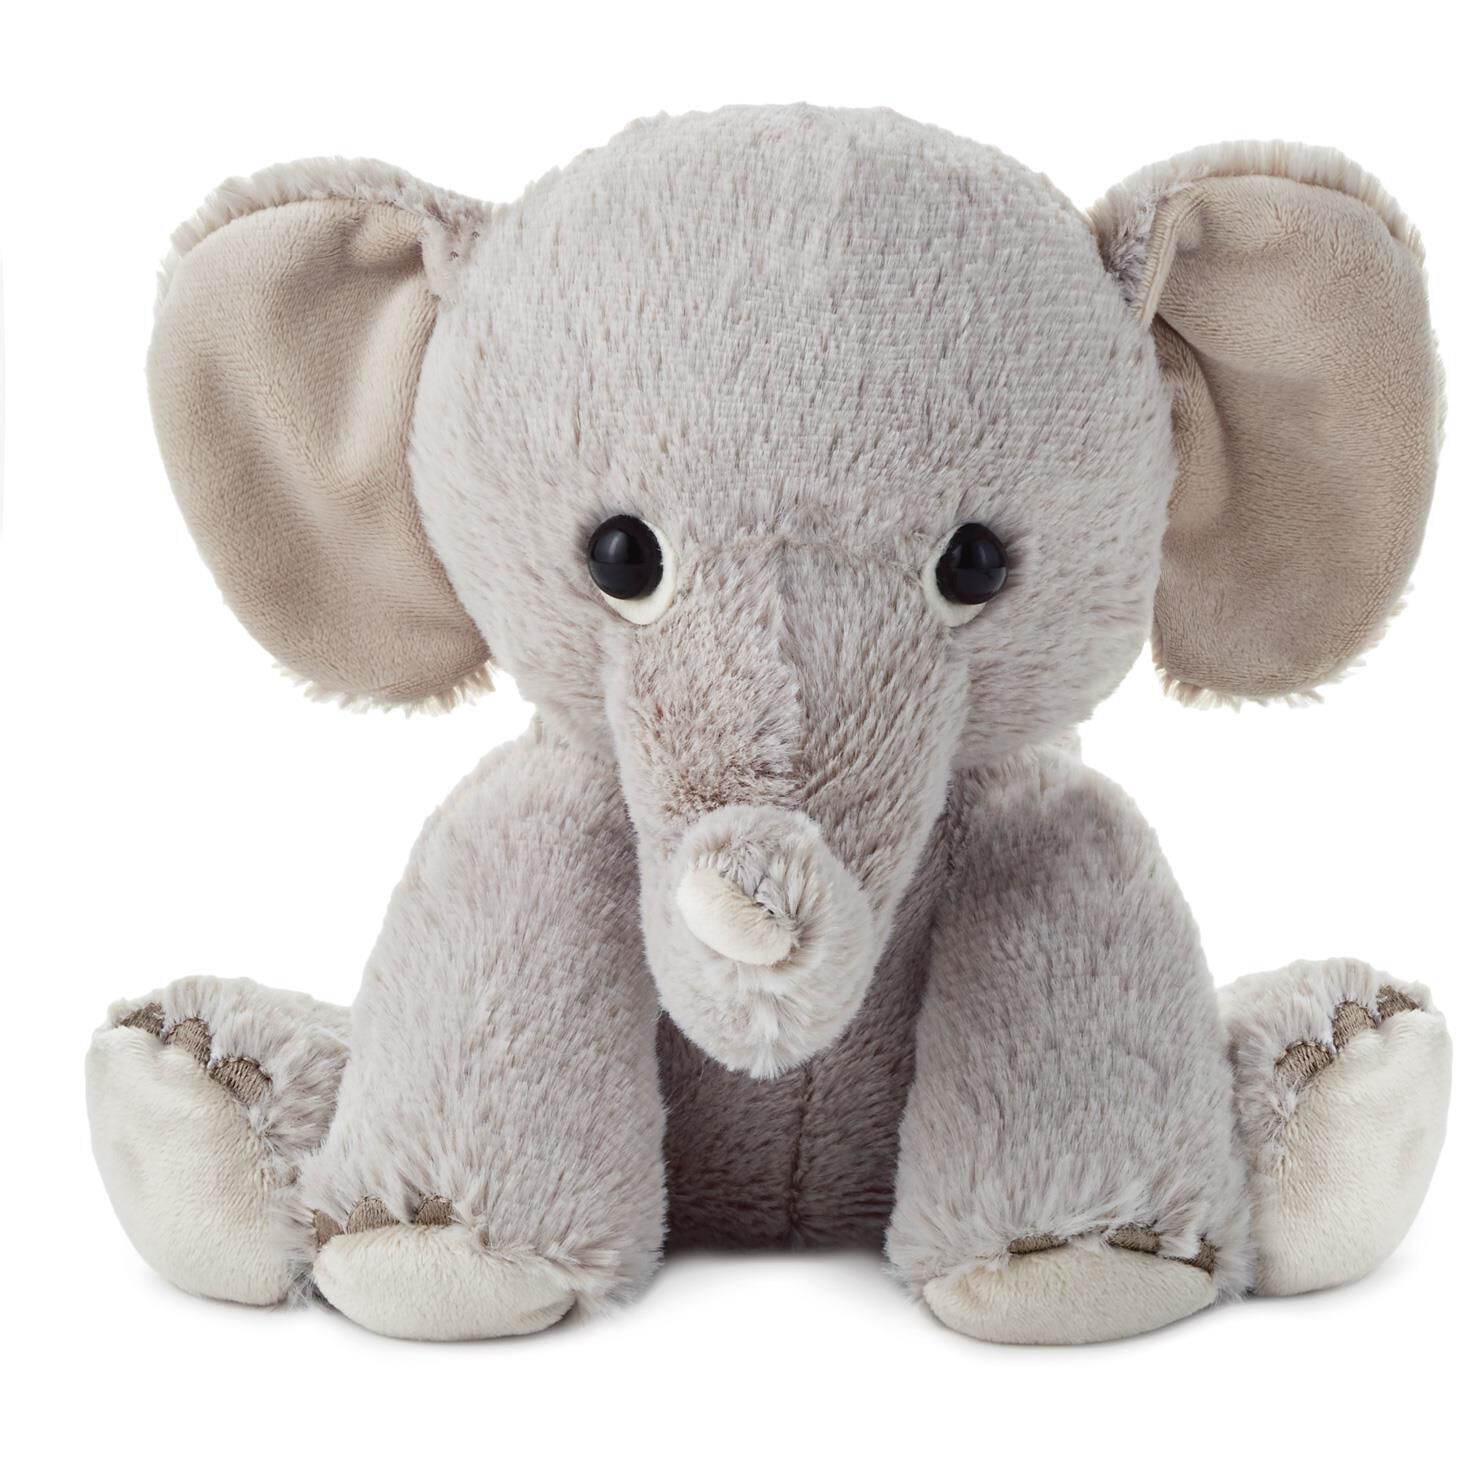 elephant stuffed animal pictures